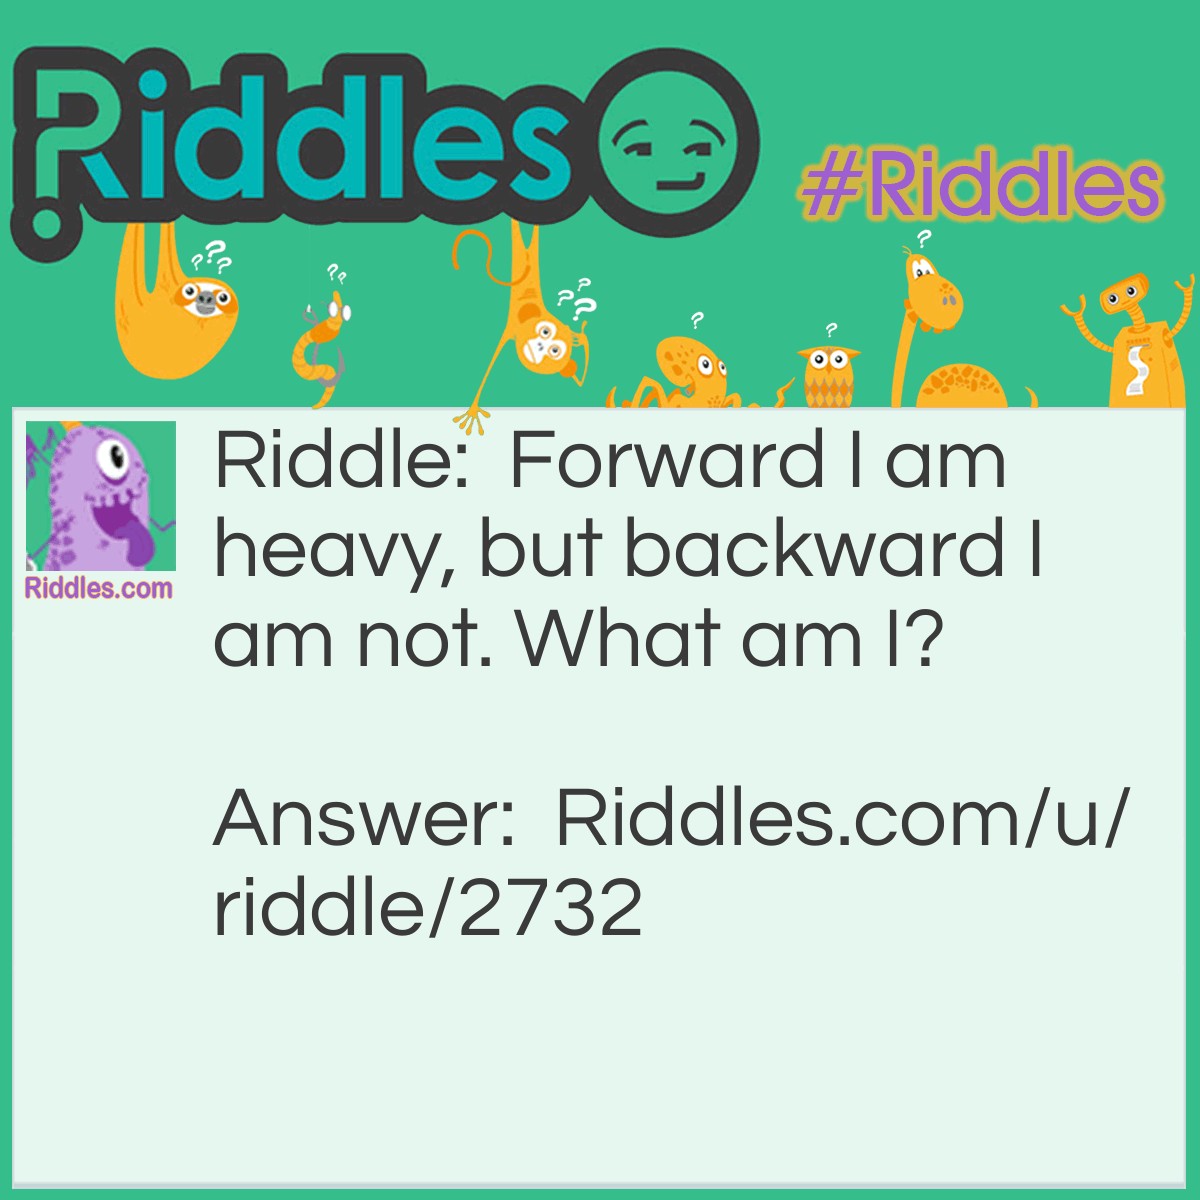 Riddle: Forward I am heavy, but backward I am not. What am I? Answer: Forward I am ton, backwards I am not.